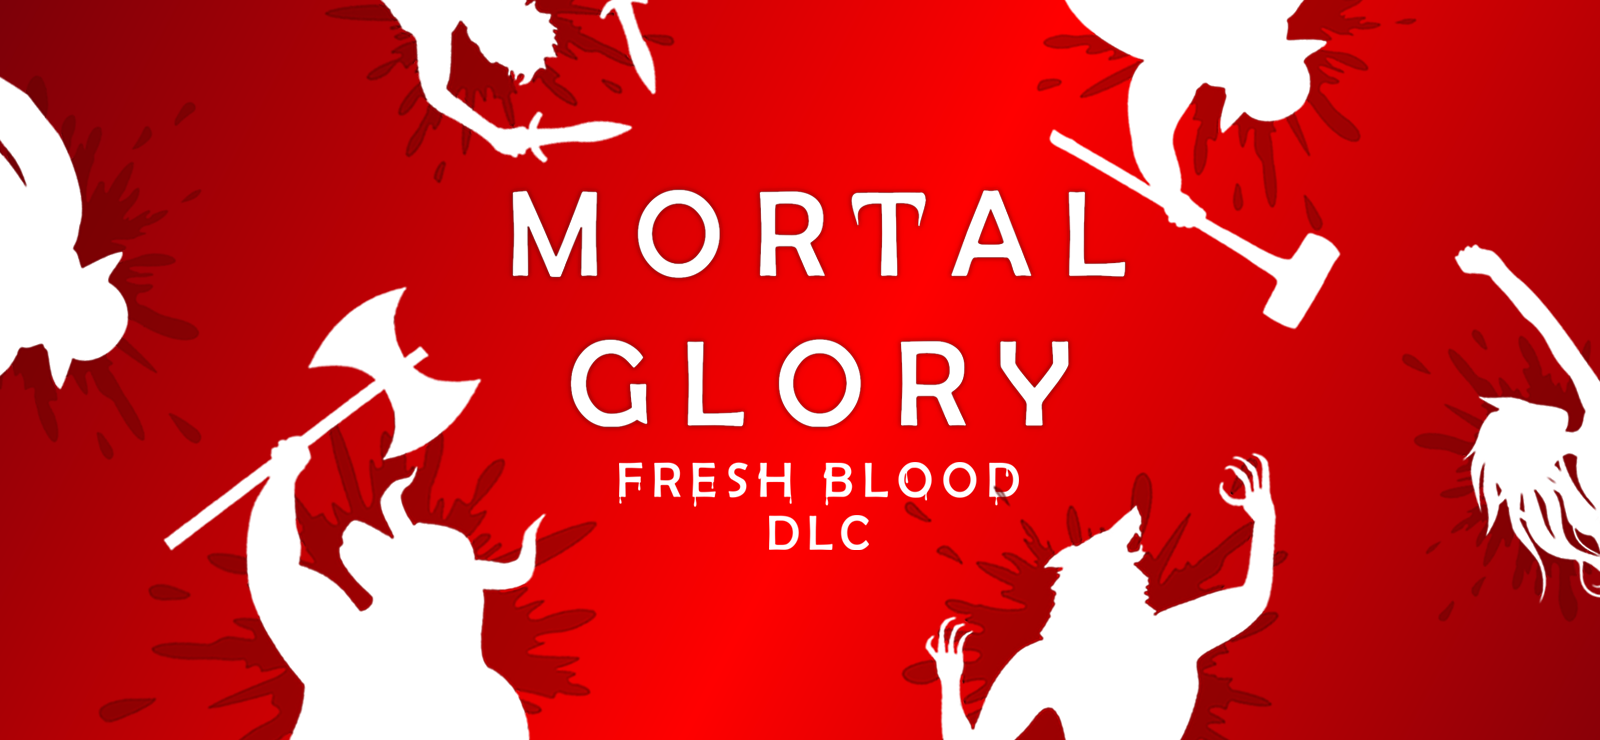 Mortal Glory - Fresh Blood DLC